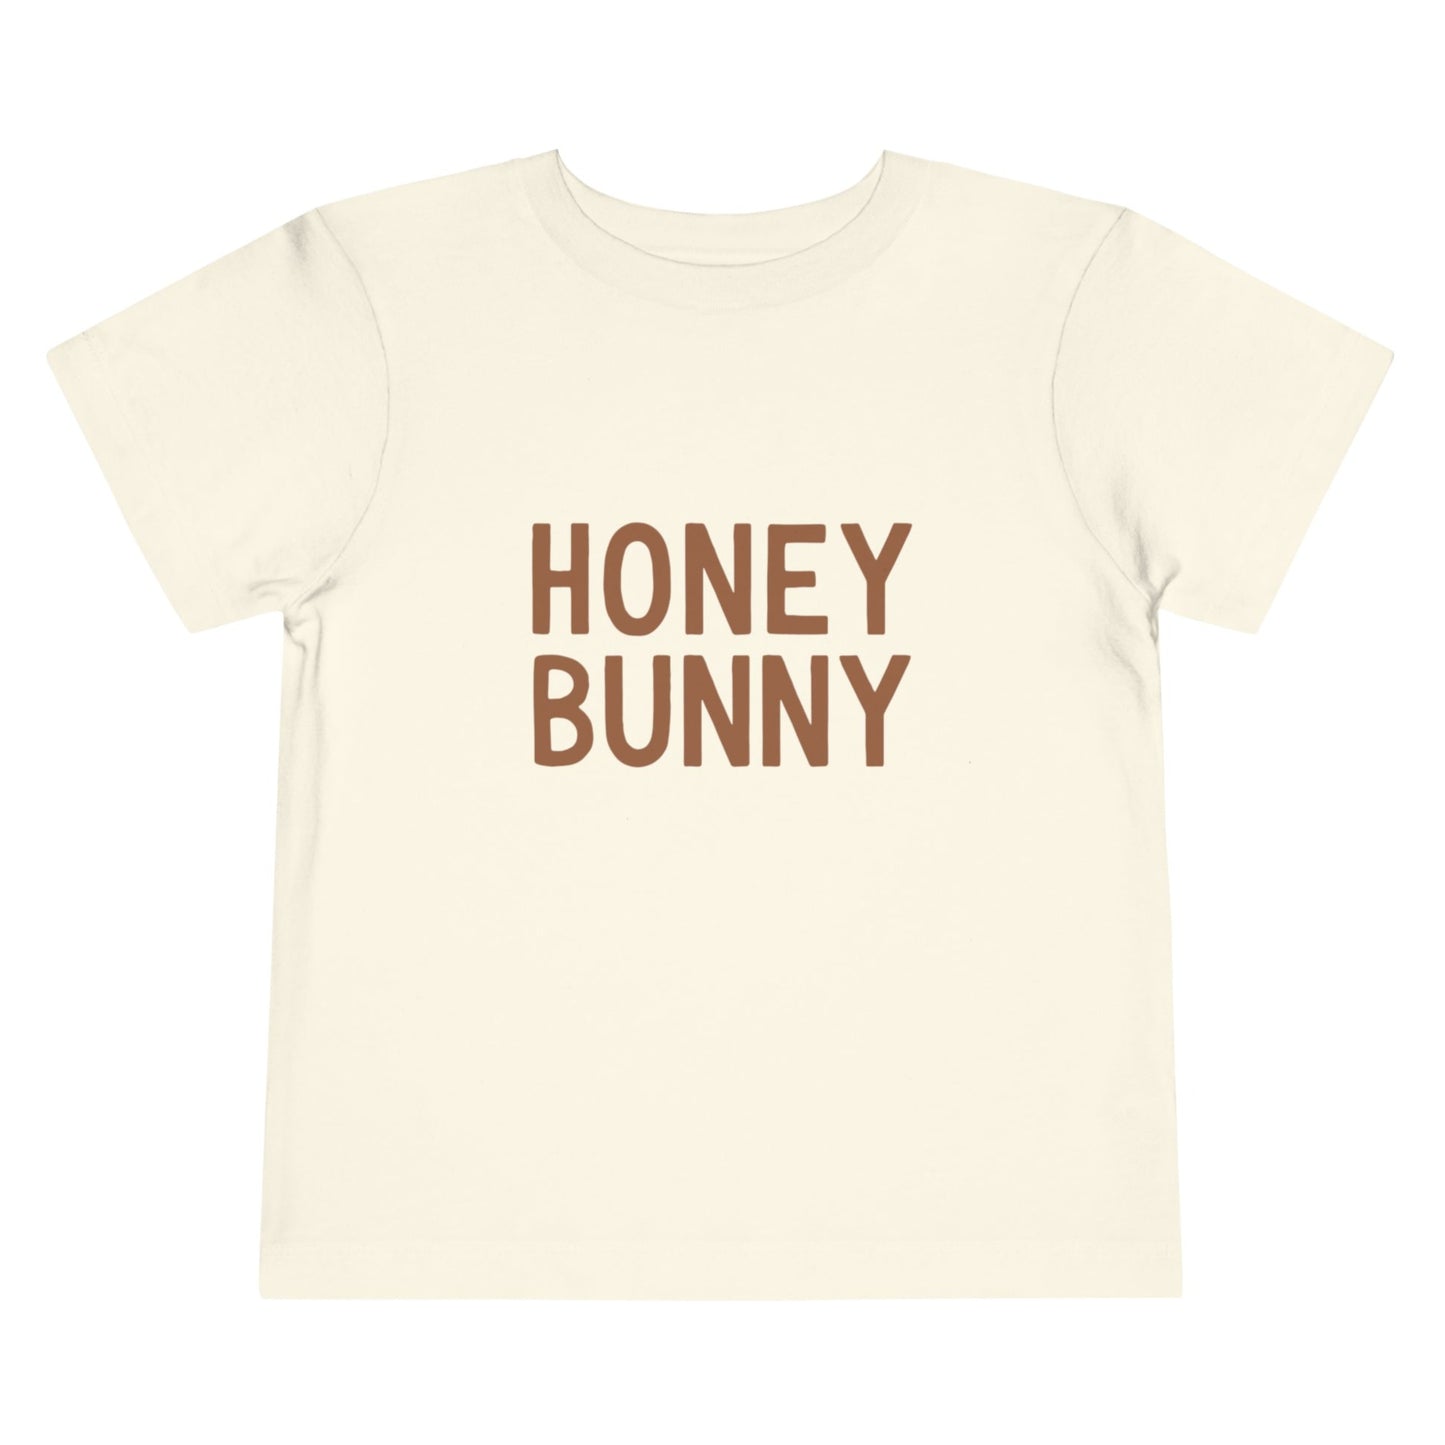 Honey Bunny Toddler Tee